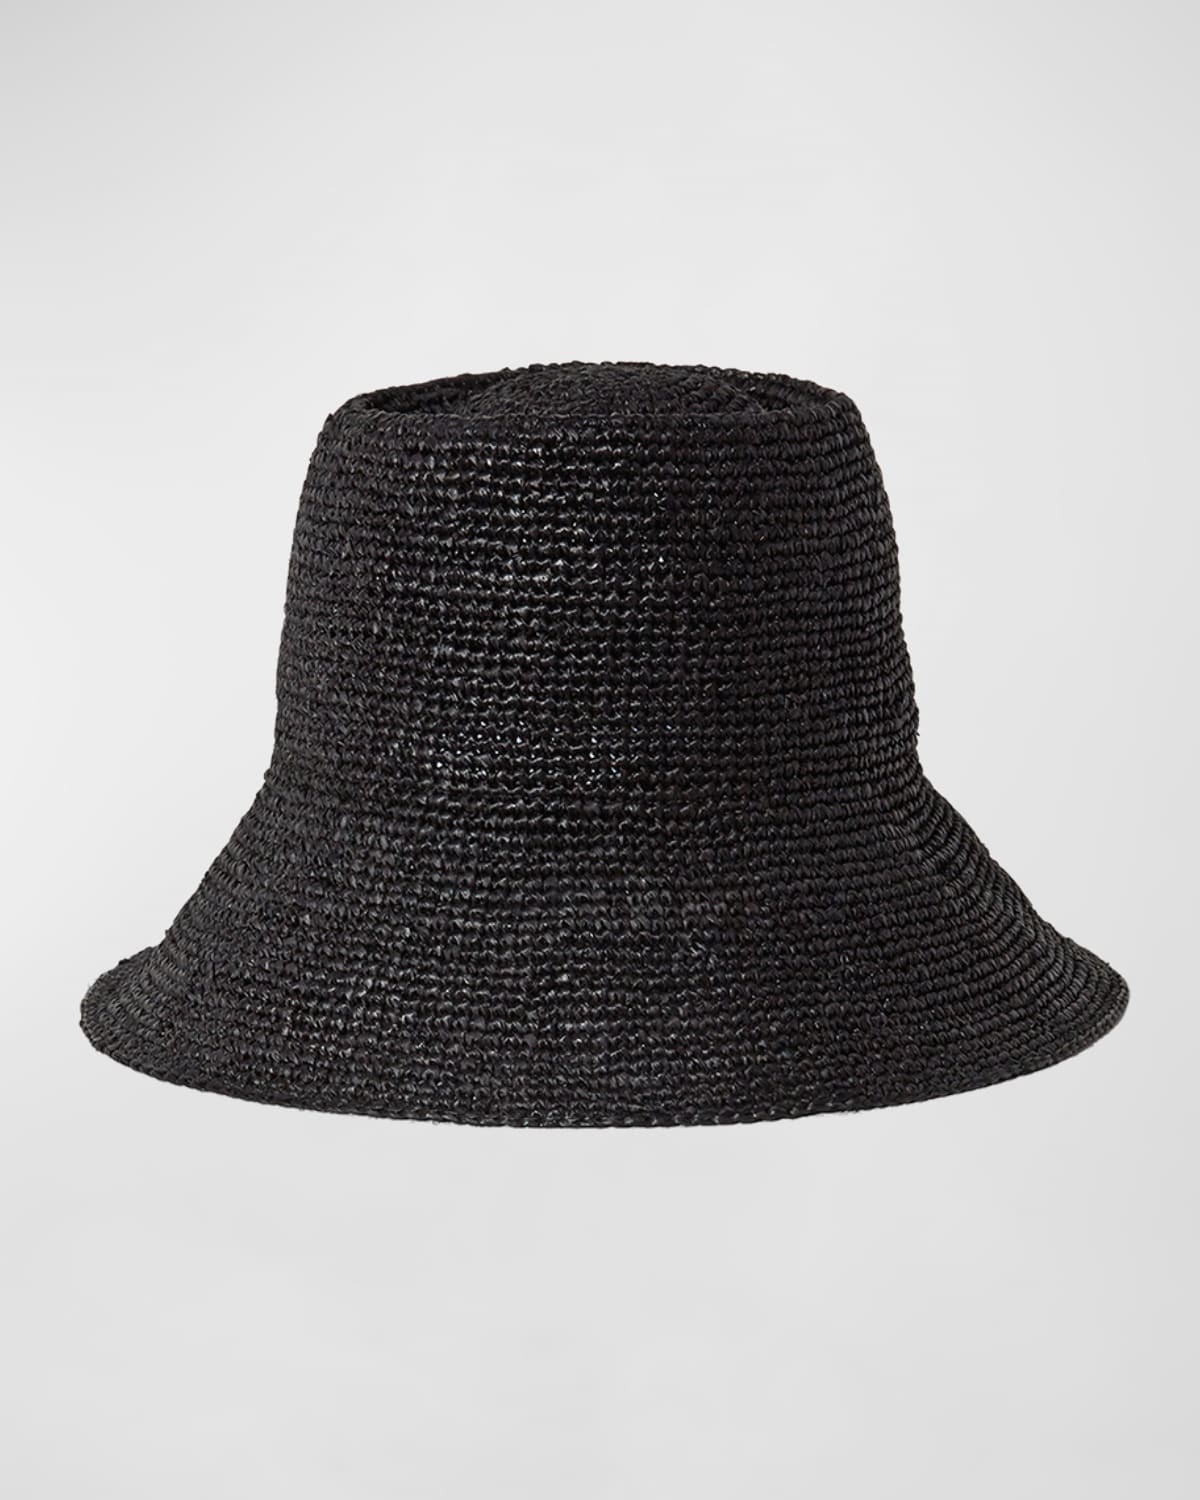 Janessa Leone Felix Large Brim Straw Hat